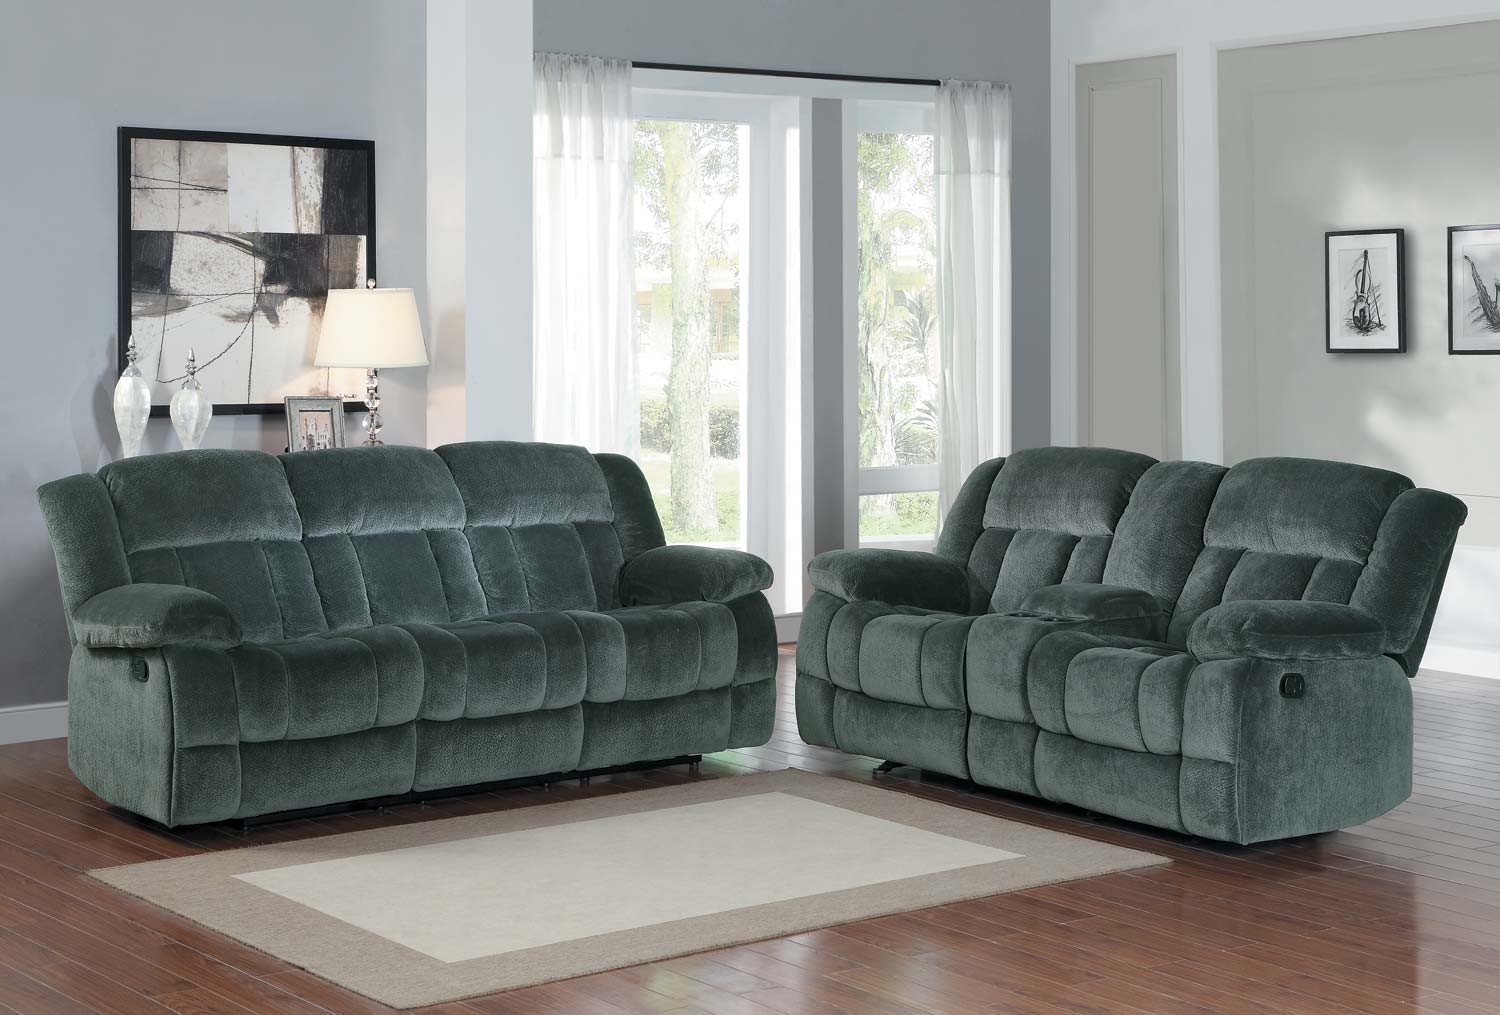 Homelegance Laurelton Reclining Sofa Set - Charcoal - Textured Plush Microfiber